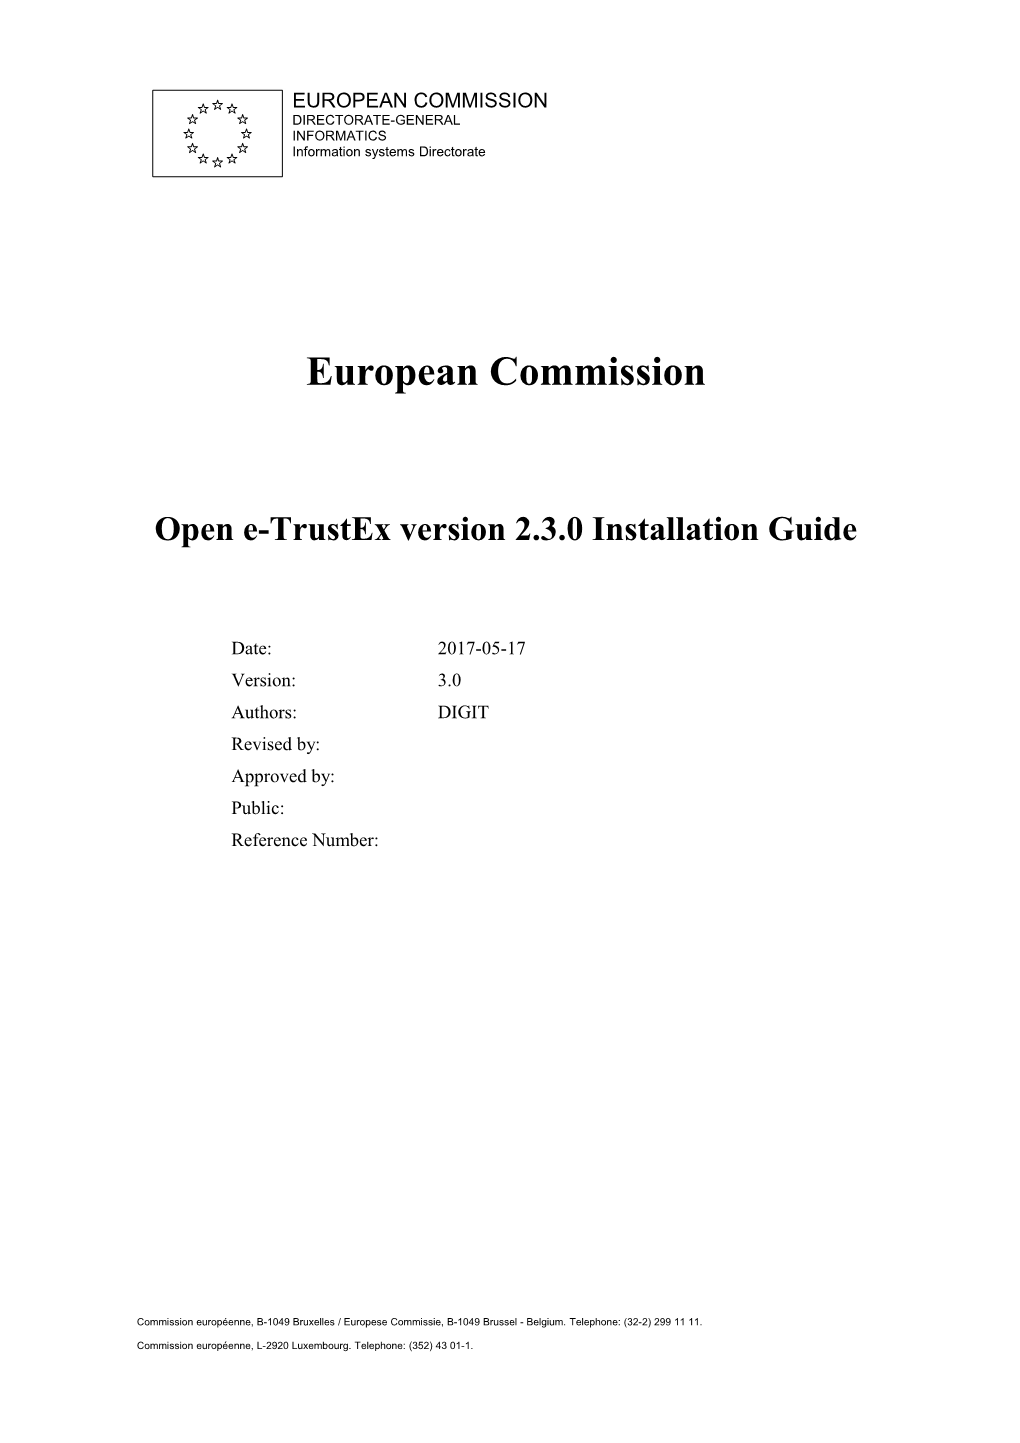 Open Etrustex Installation Guide